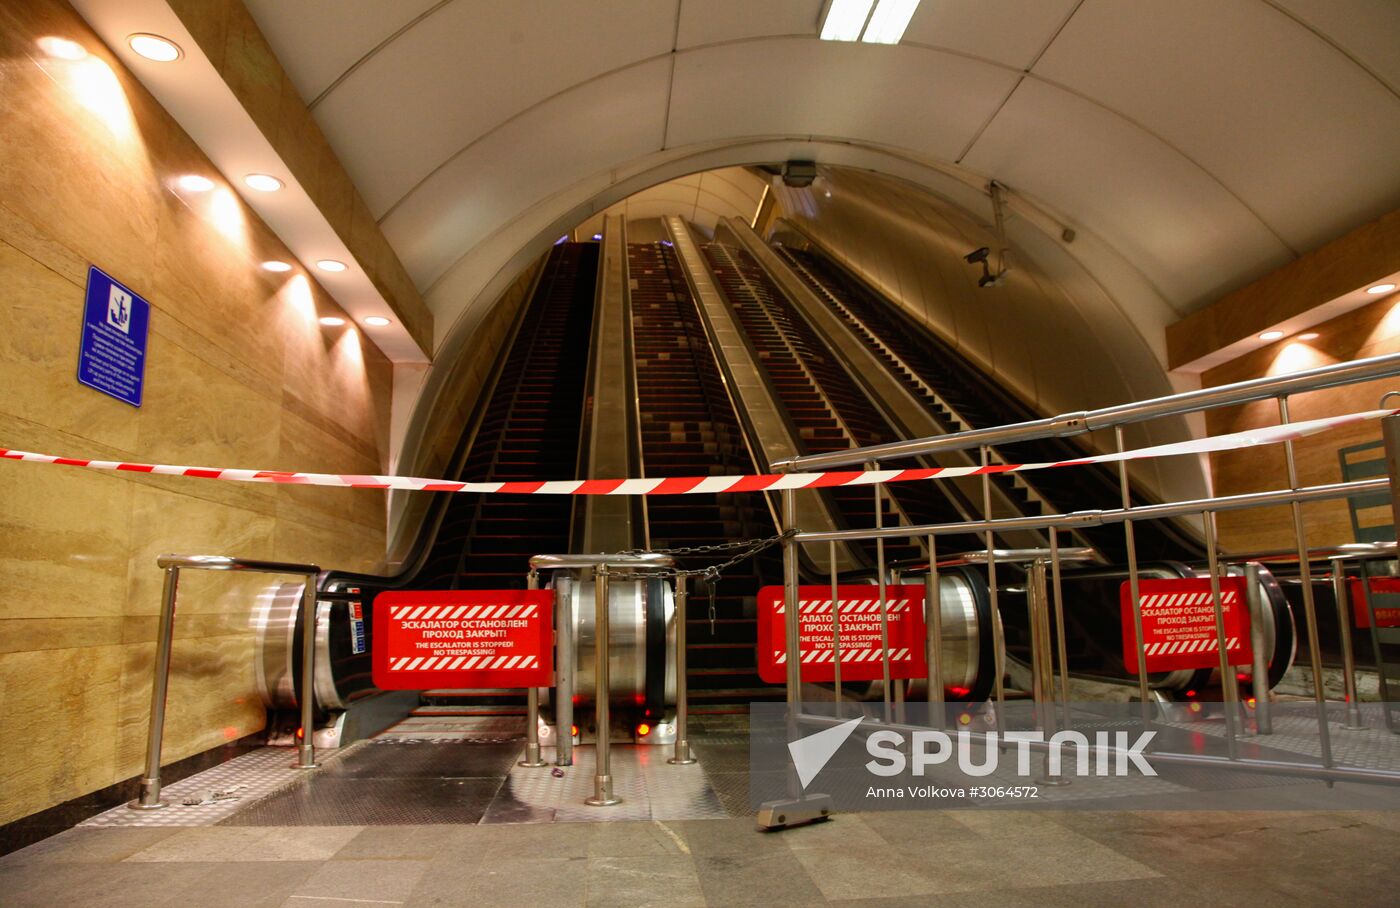 Explosions in the St. Petersburg metro